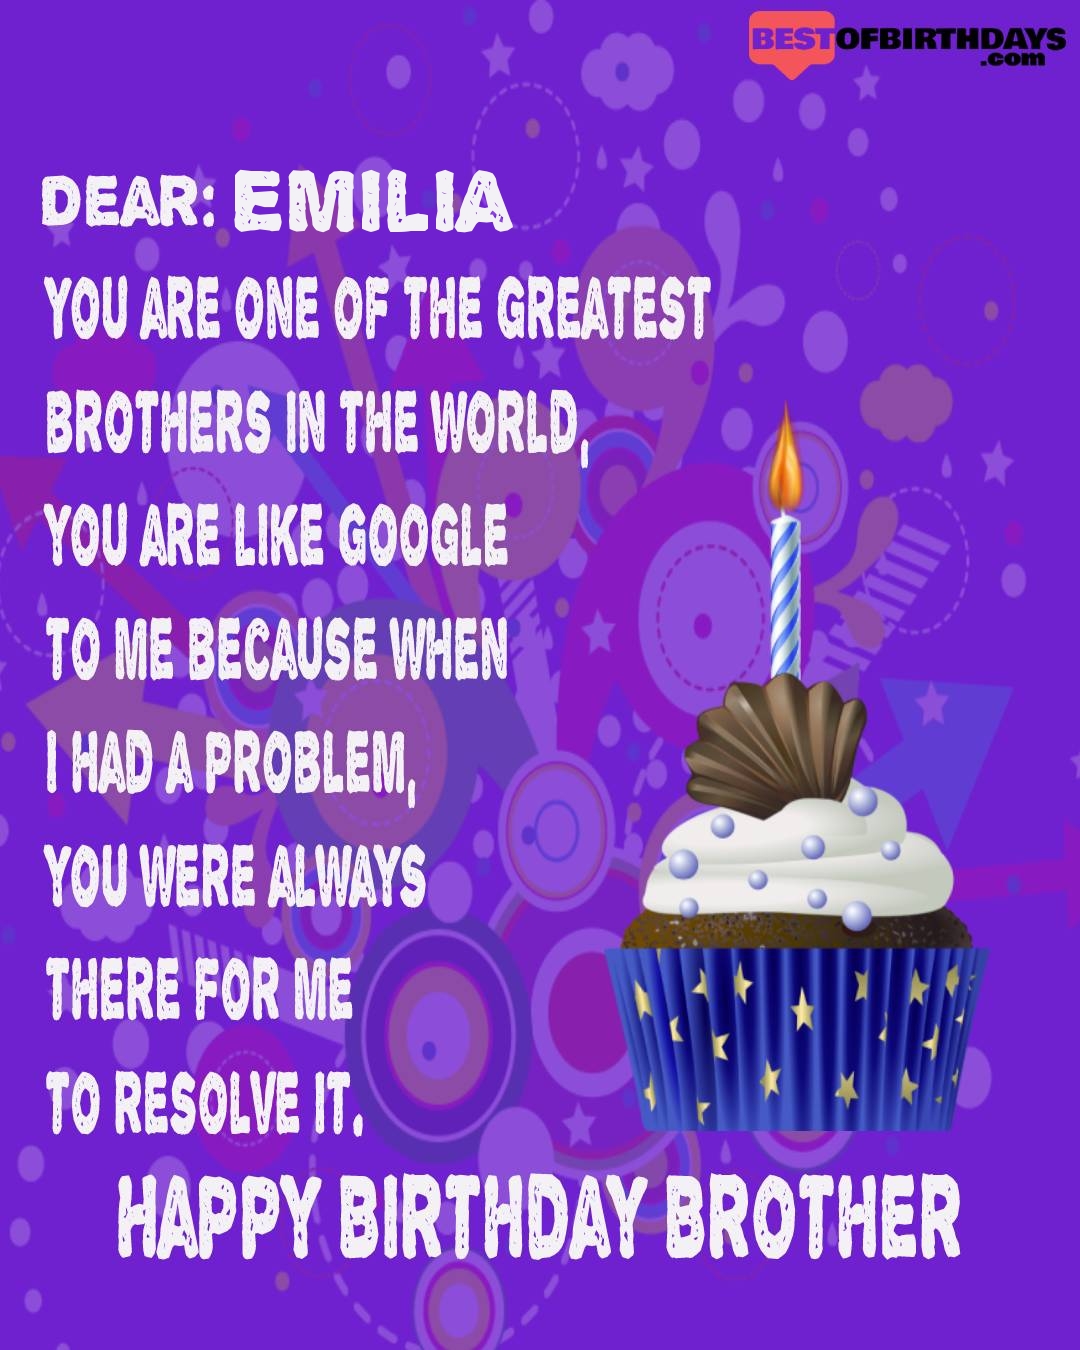 Happy birthday emilia bhai brother bro